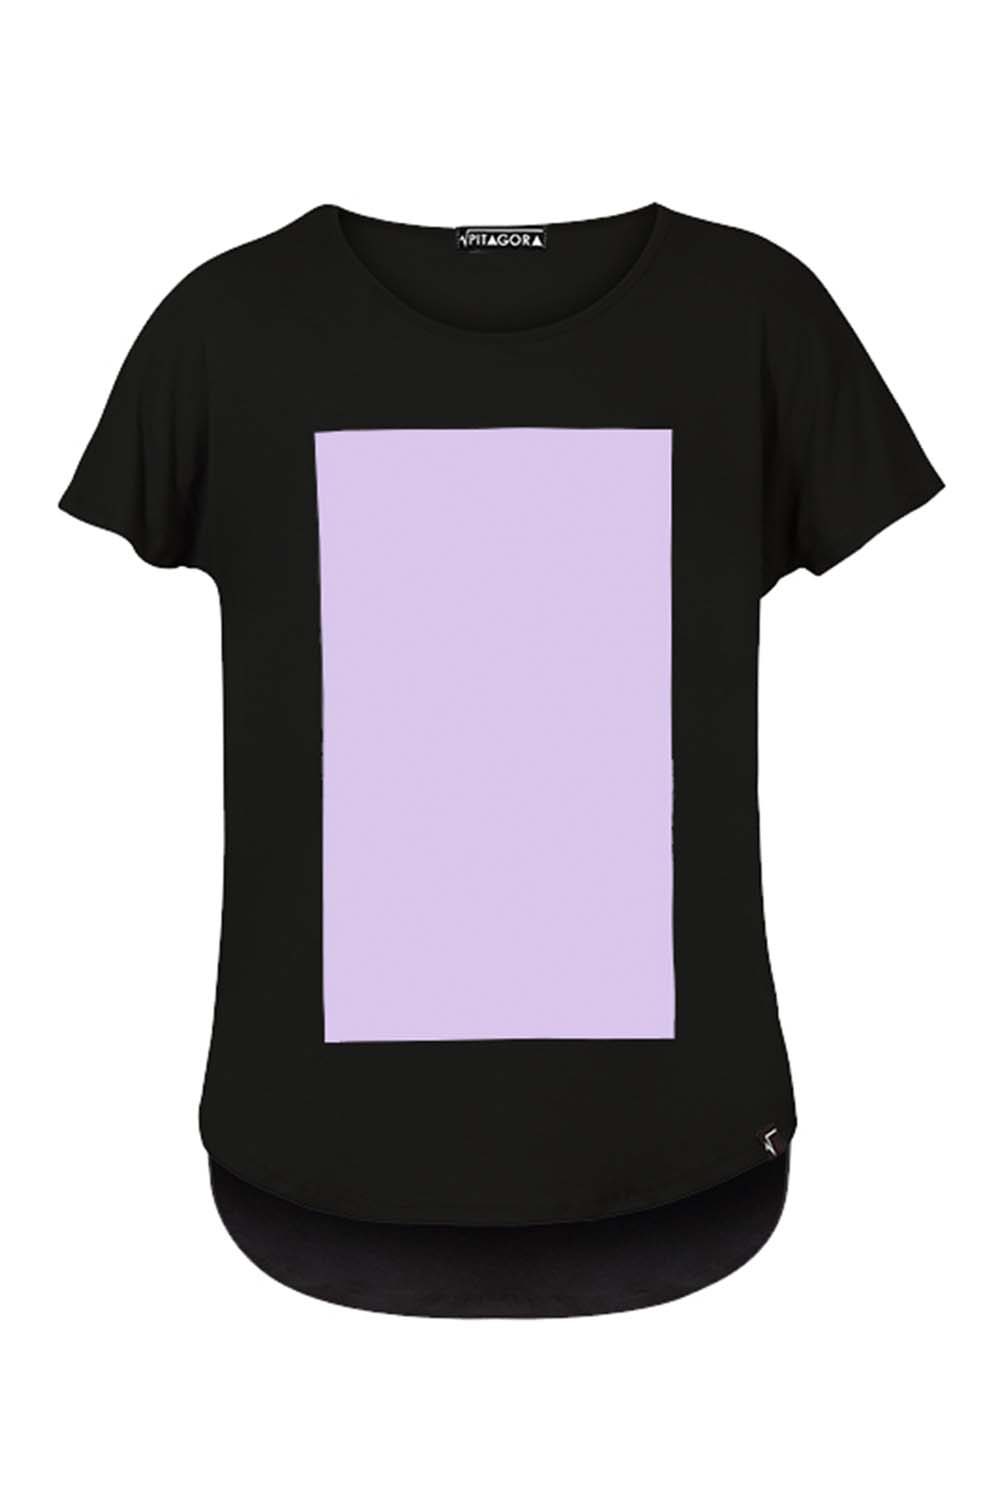 imagen de producto de la camiseta quadrilaterus negro y lila